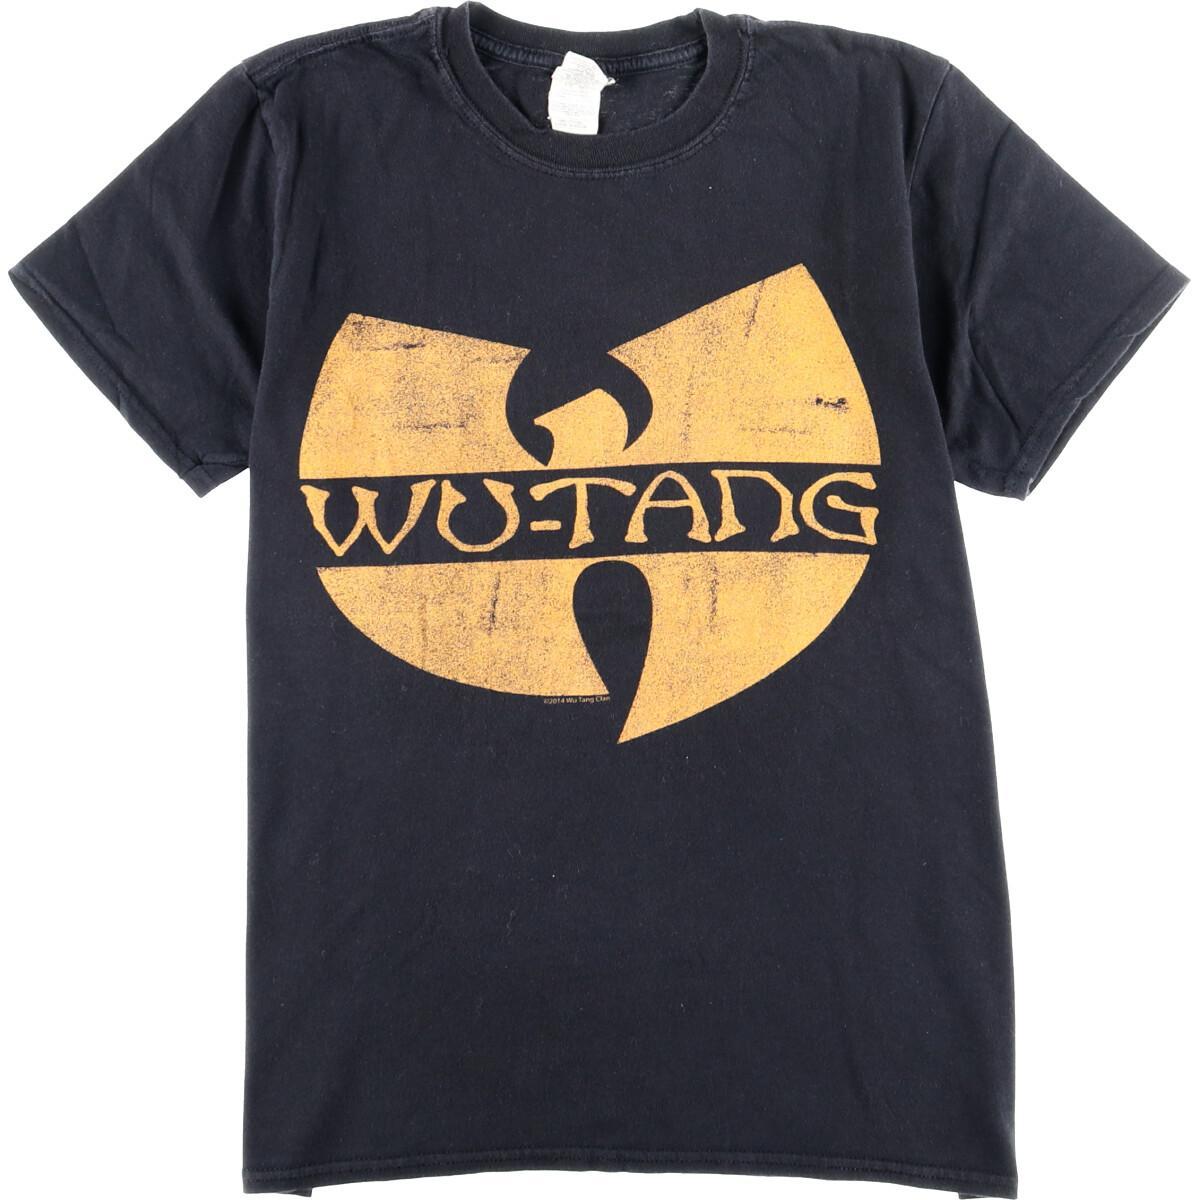 WU-TANG CLAN ウータンクラン Tシャツ raptee USA Tシャツ | endageism.com